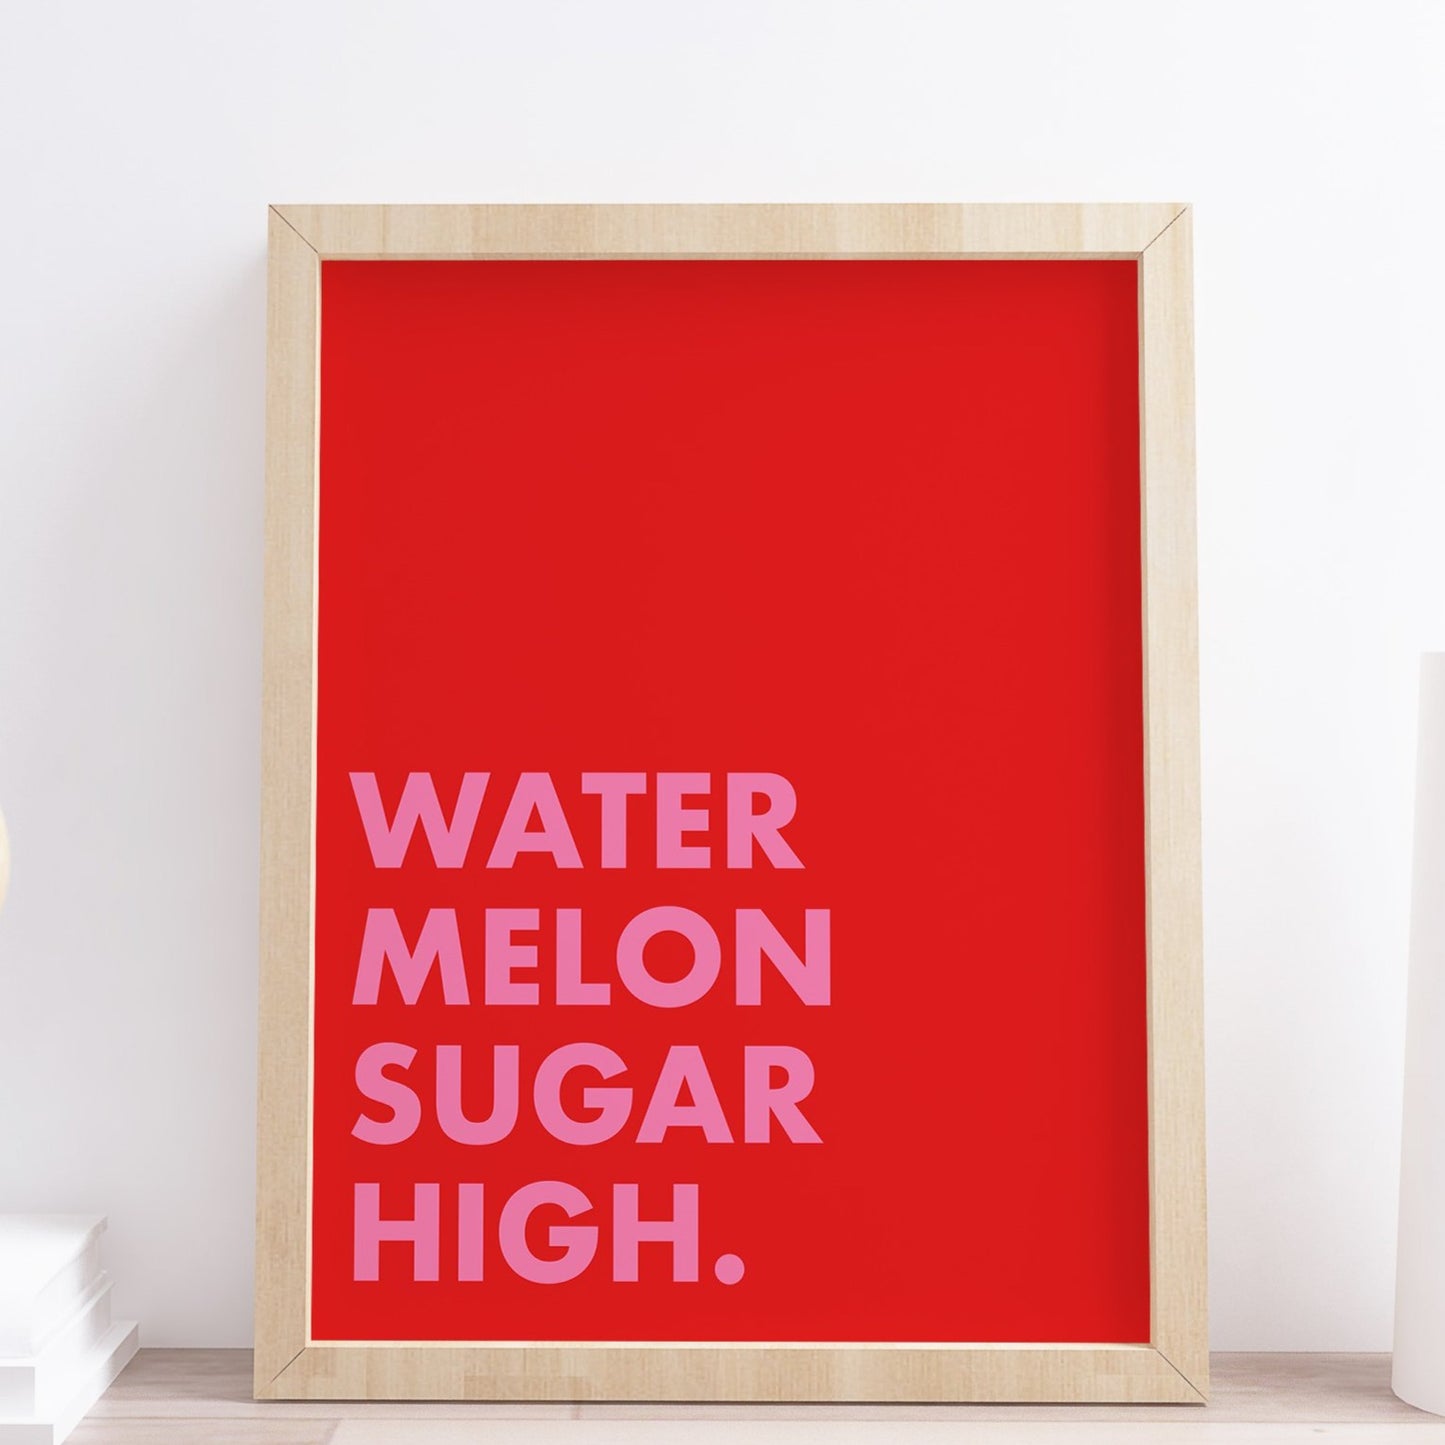 Watermelon sugar high harry styles lyrics print